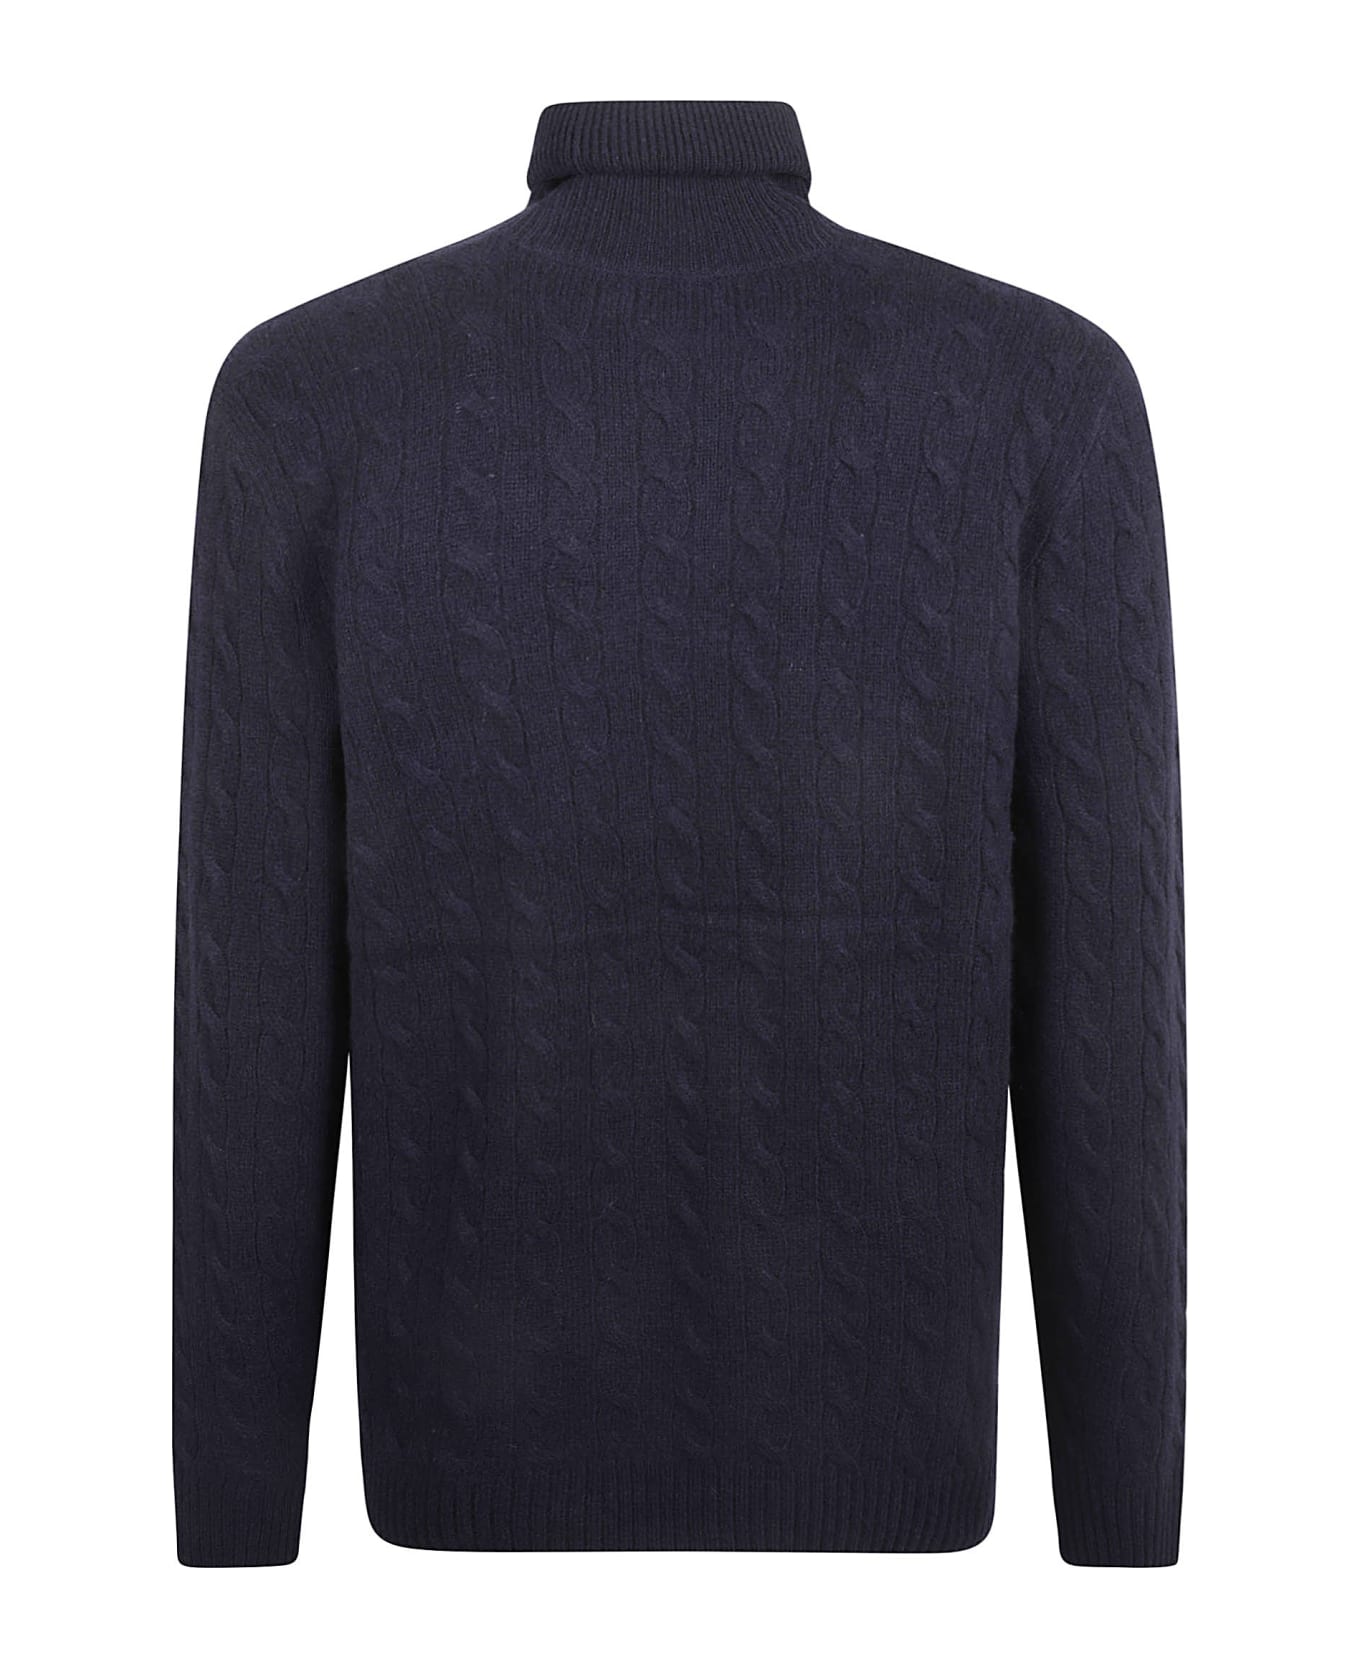 Ralph Lauren Logo Embroidery Turtleneck Patterned Sweater - Blue